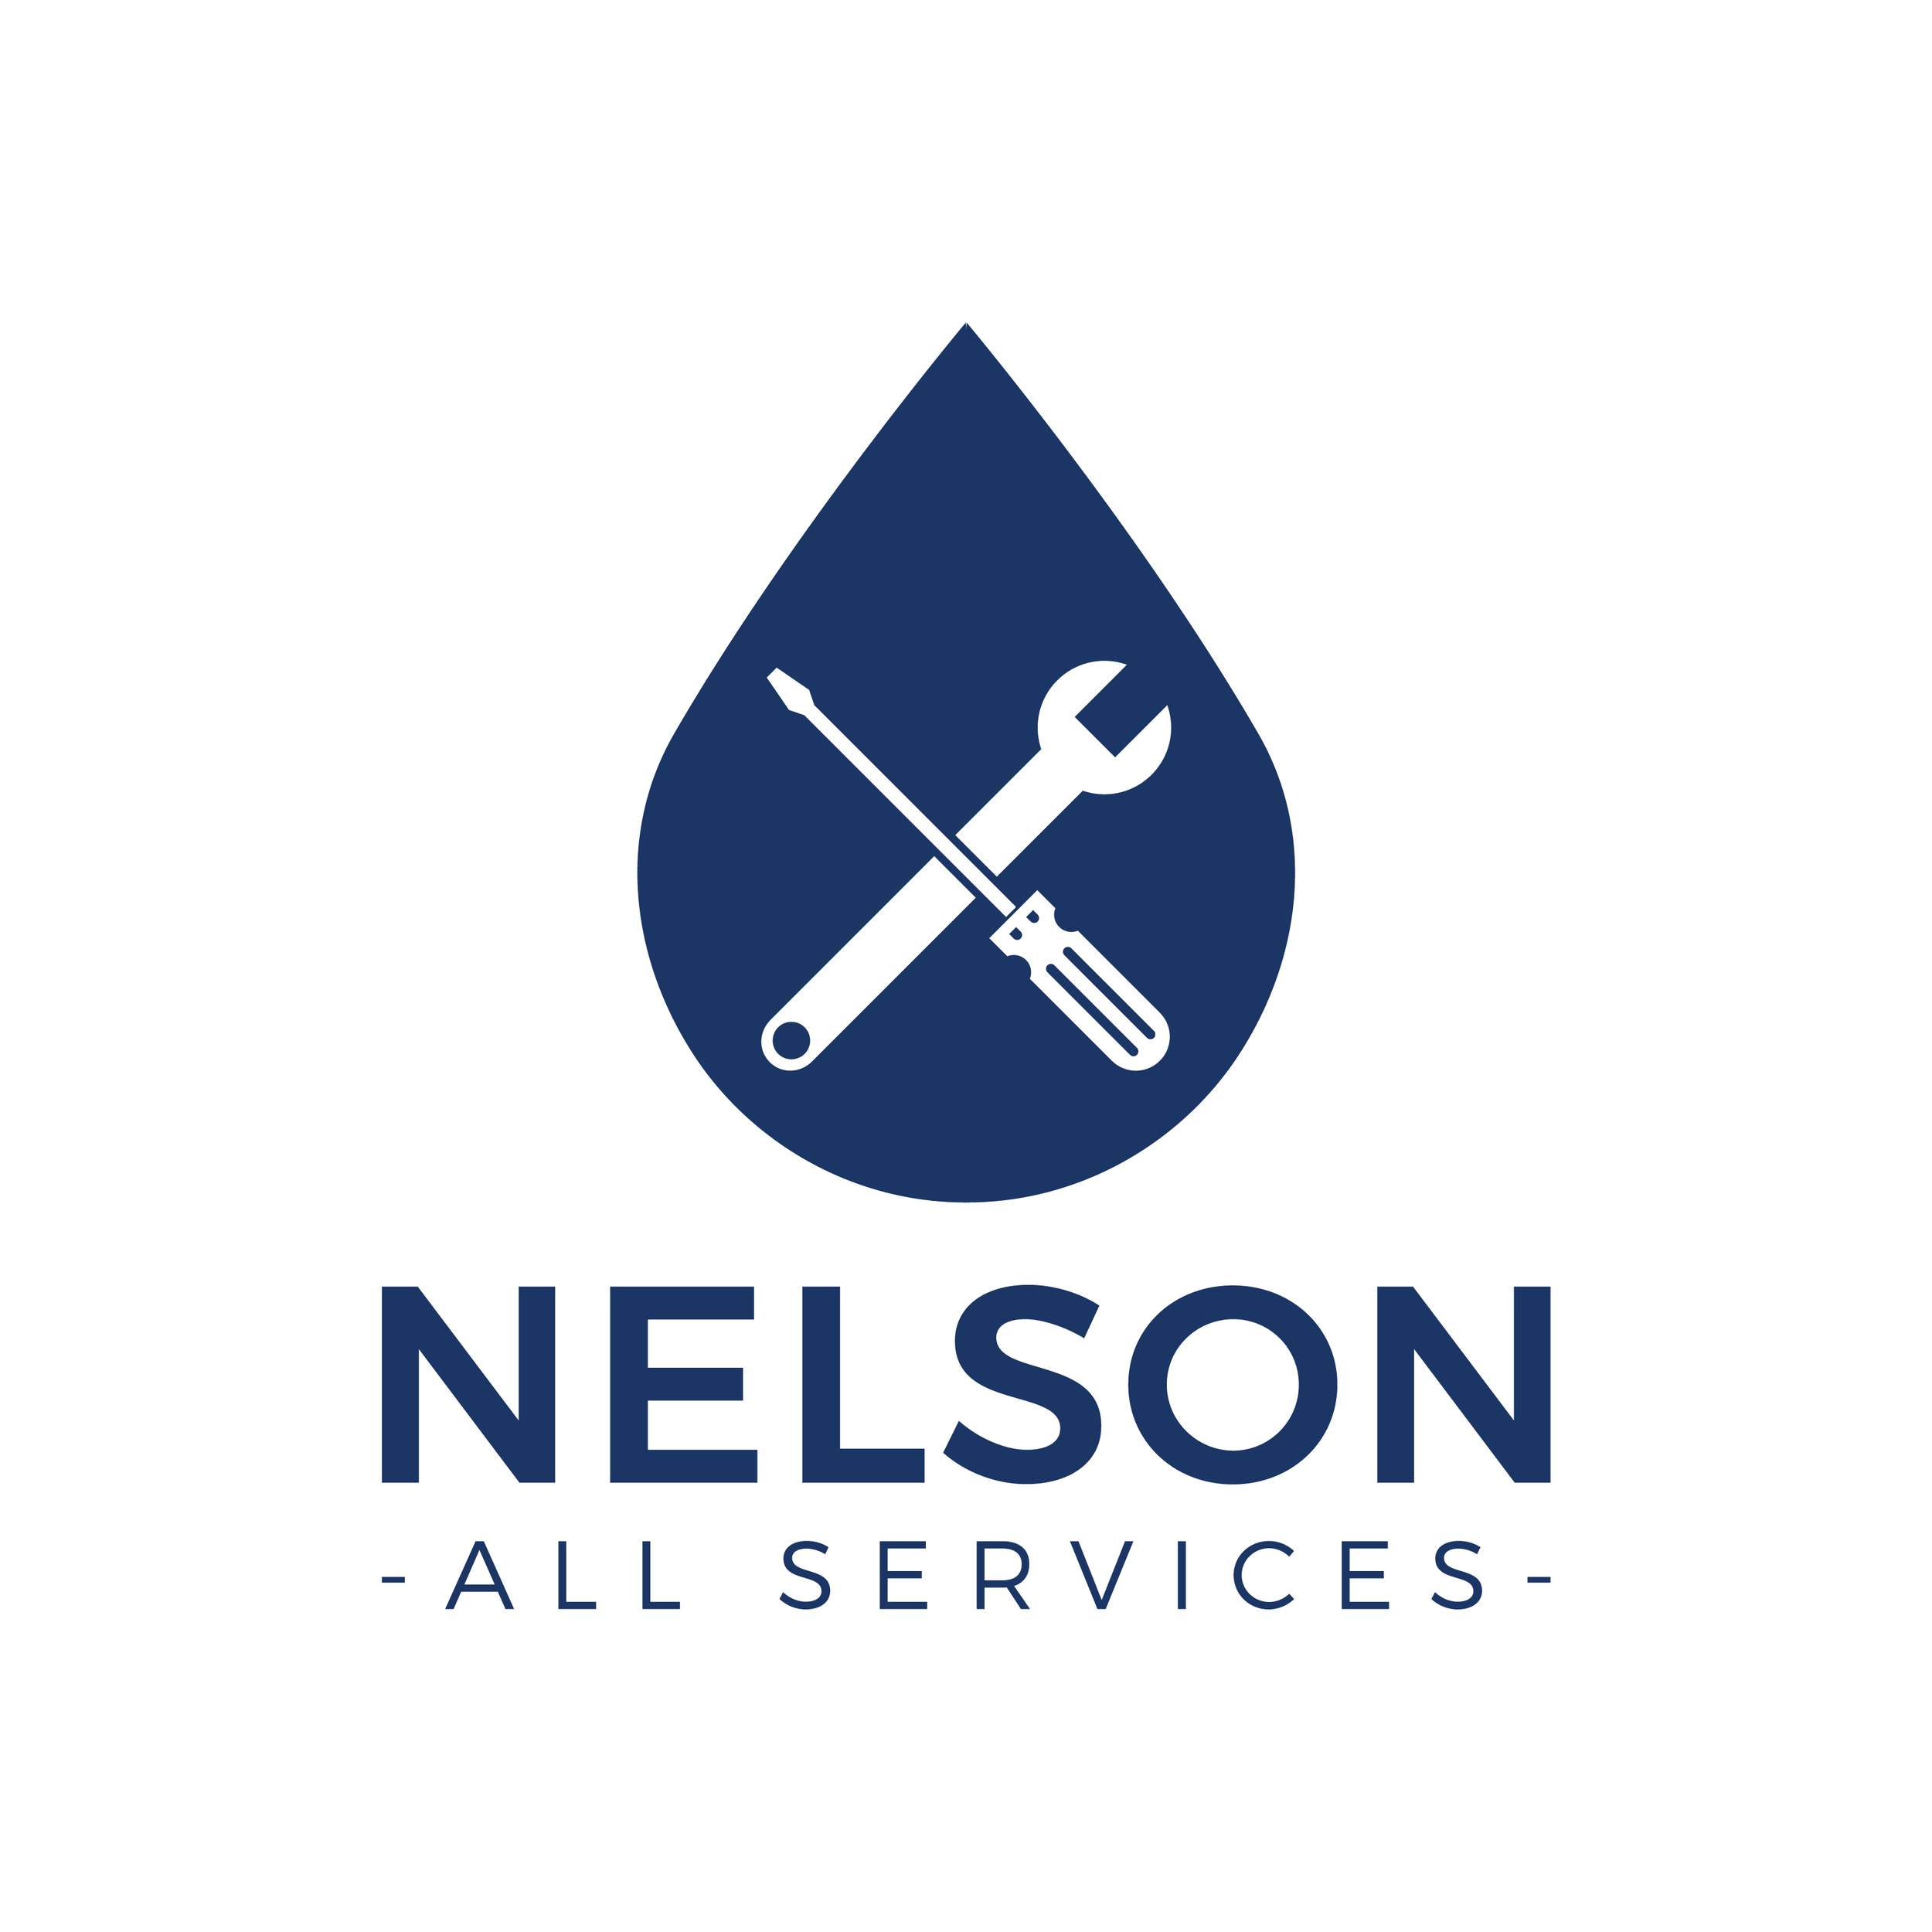 Nelson All Services Logo Design